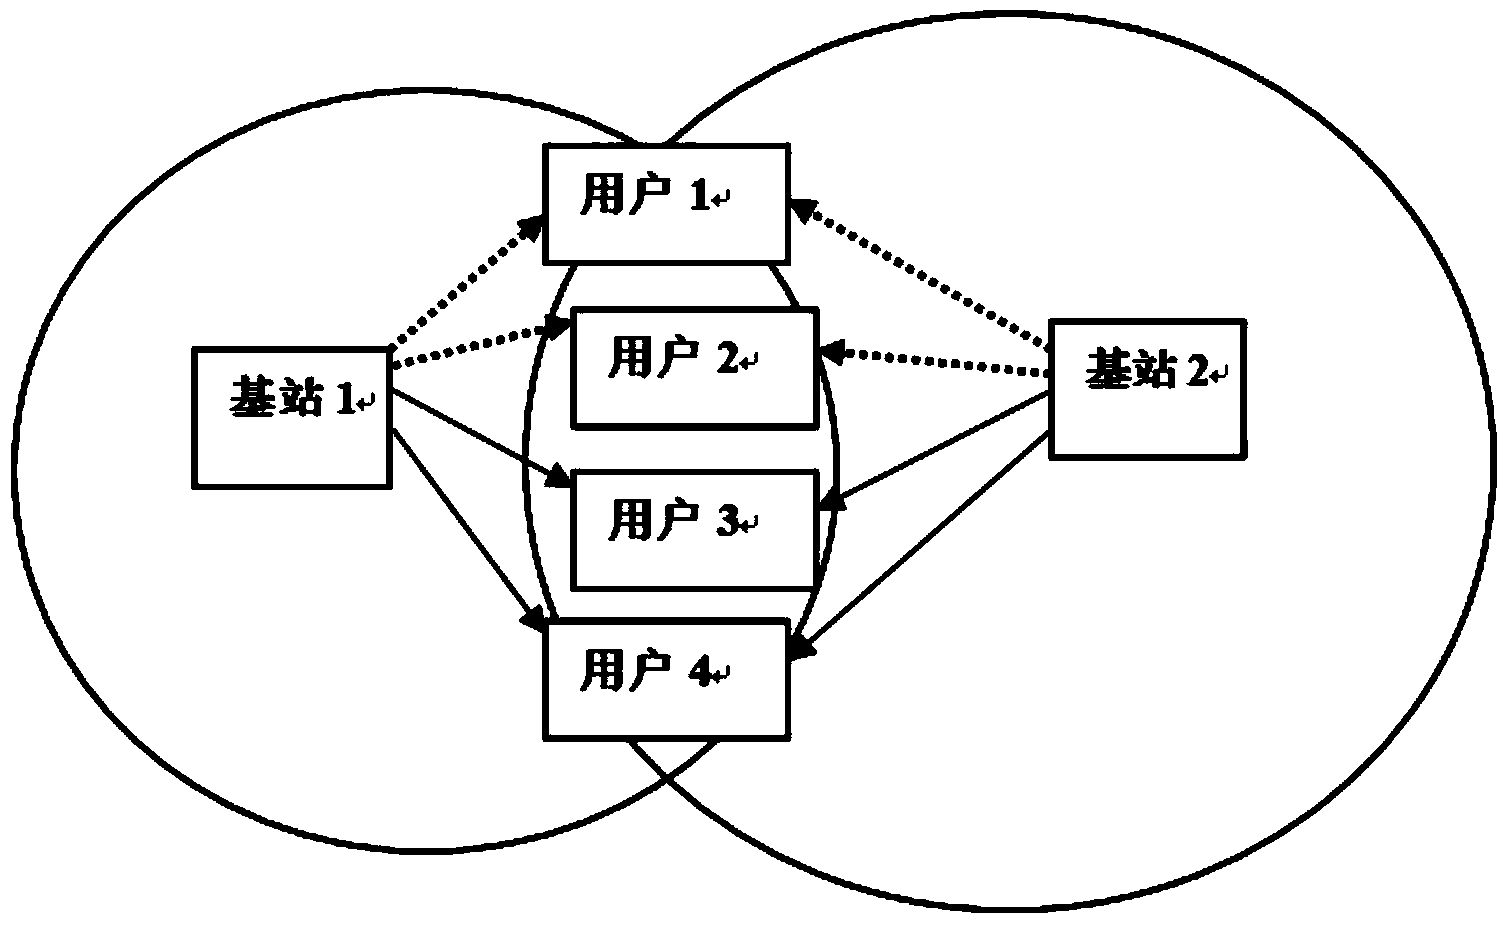 Multi-base-station cooperation communication method based on user pairing